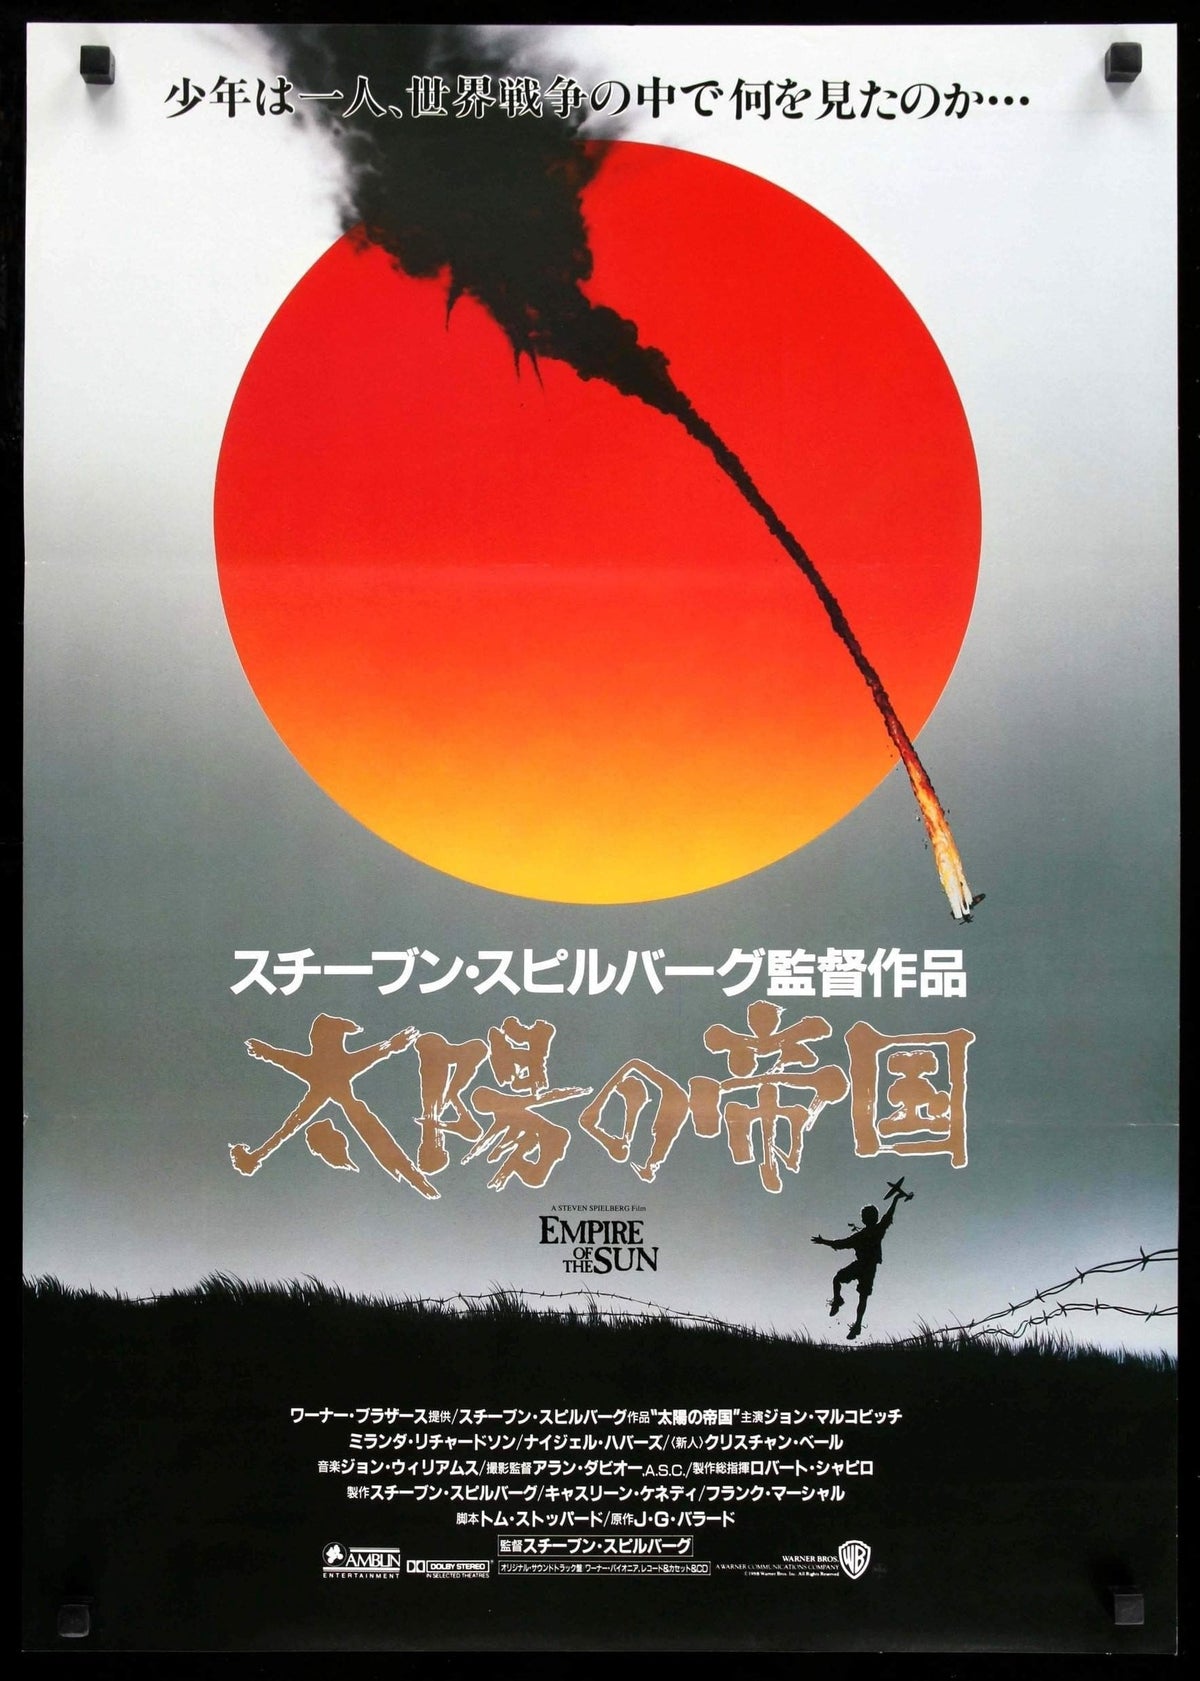 Empire of the Sun (1987) original movie poster for sale at Original Film Art